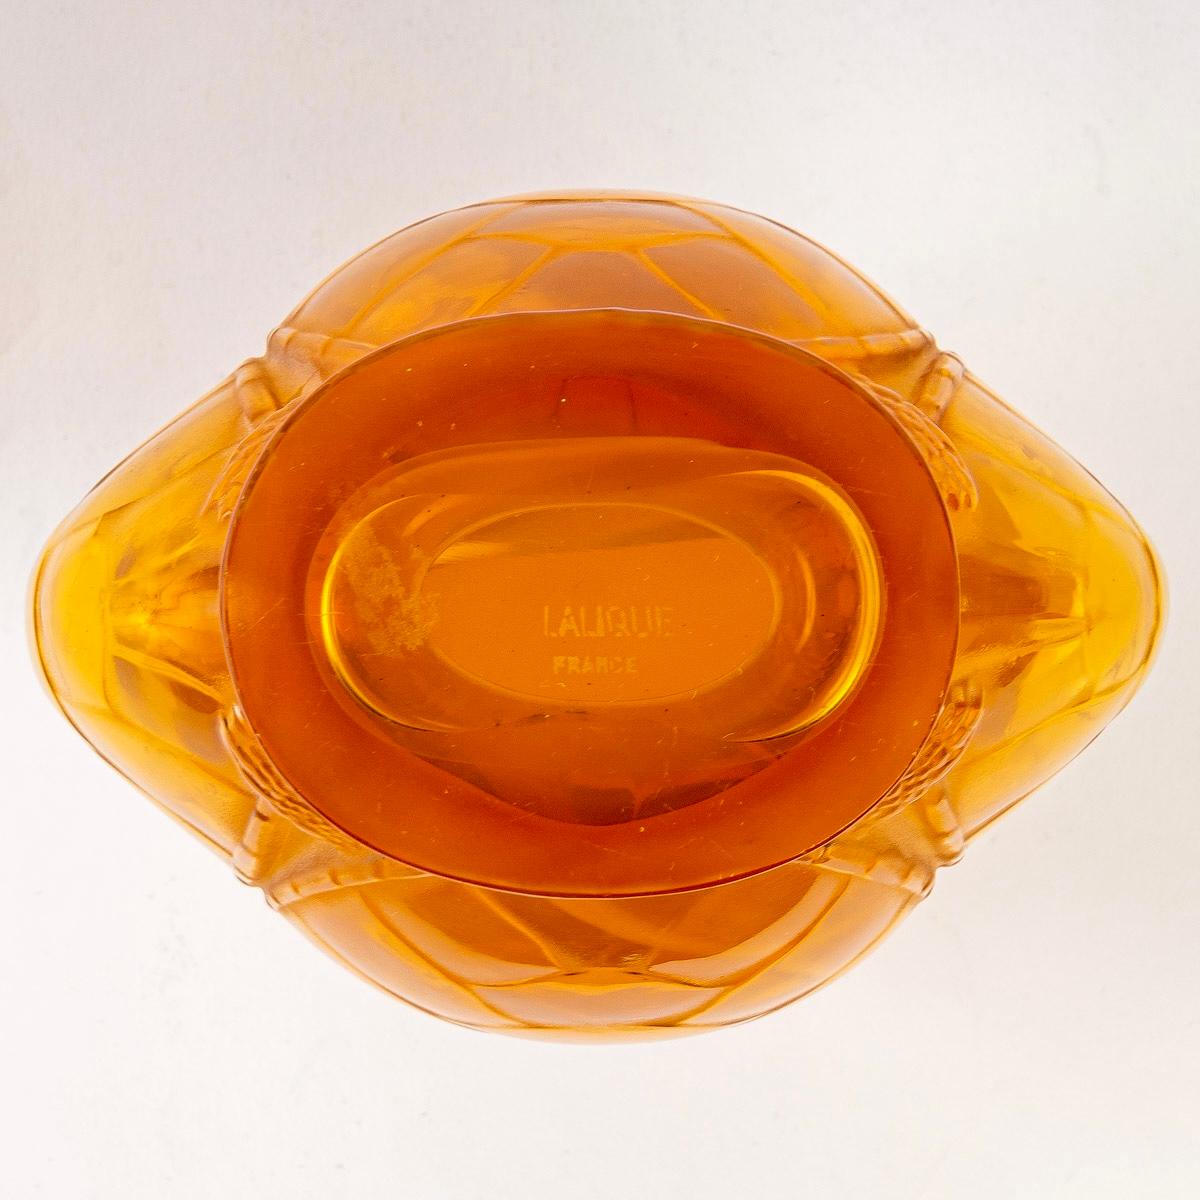 Molded 1950 Marc Lalique N°7 Tortue Turtle Morabito Perfume Bottle Orange Glass Biggest For Sale